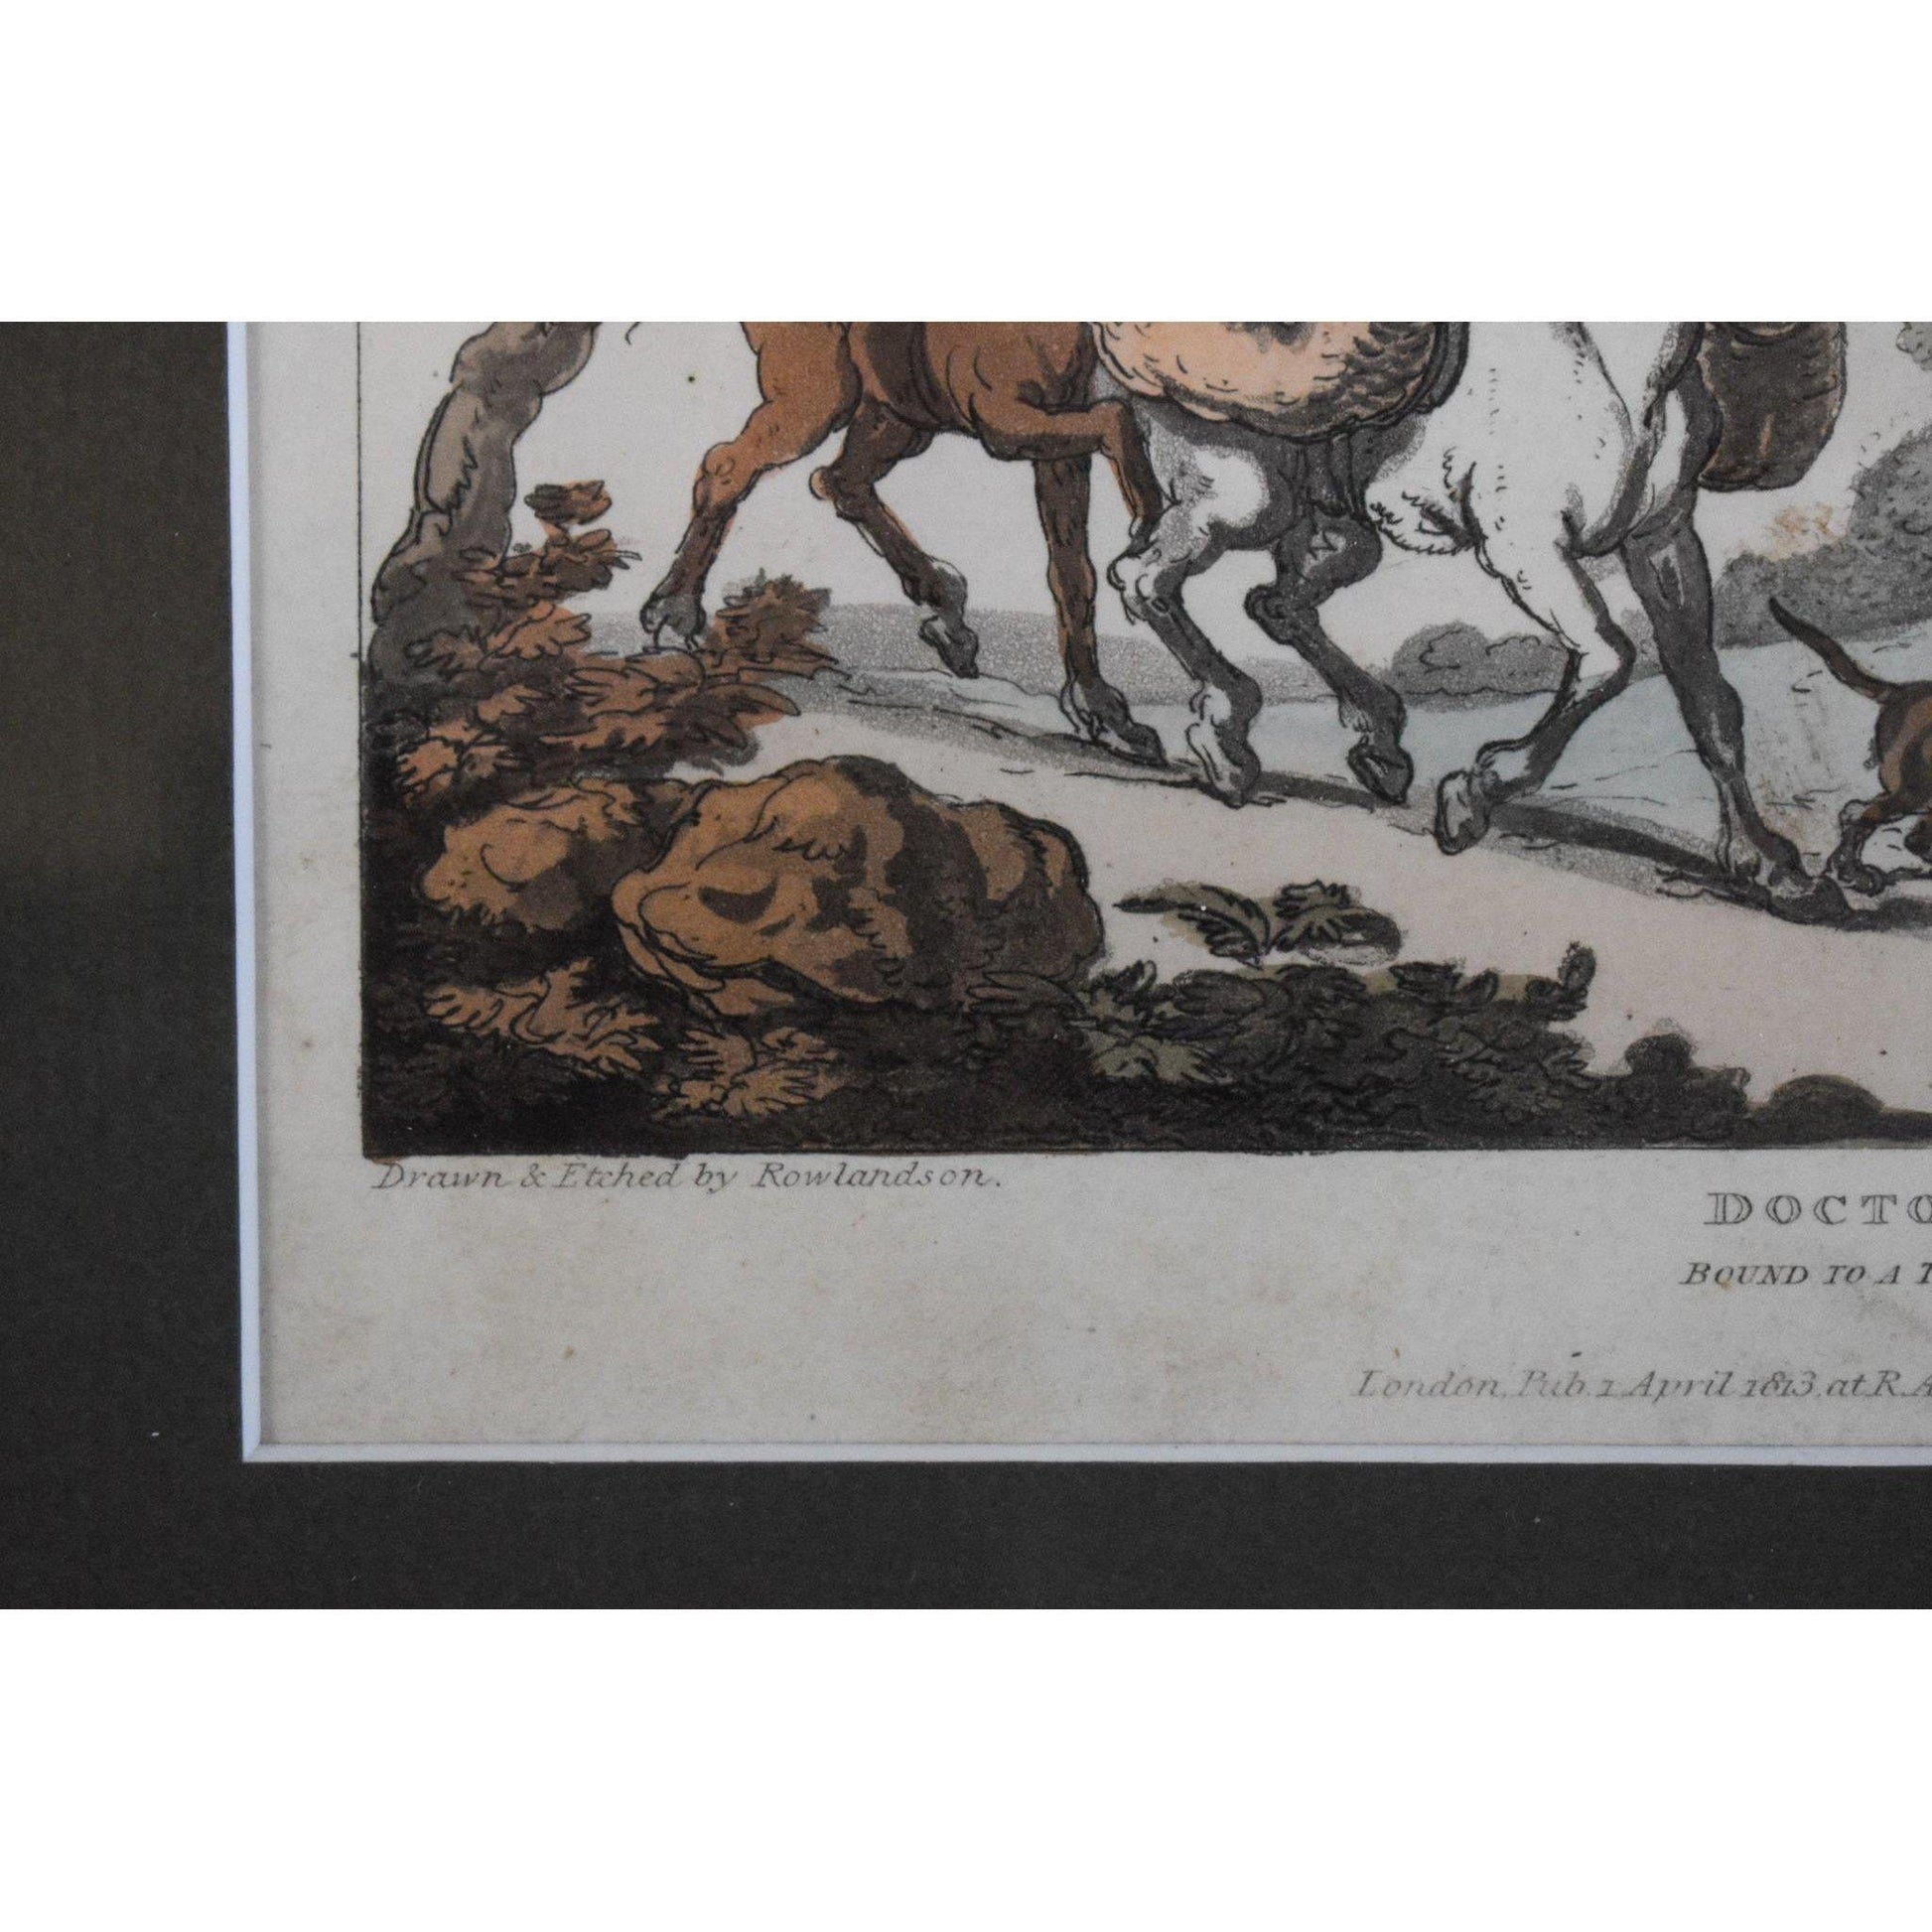 Thomas Rowlandson etching entitled Doctor Sintax Highwaymen Incident original 1813 two prints for sale at Winckelmann Gallery